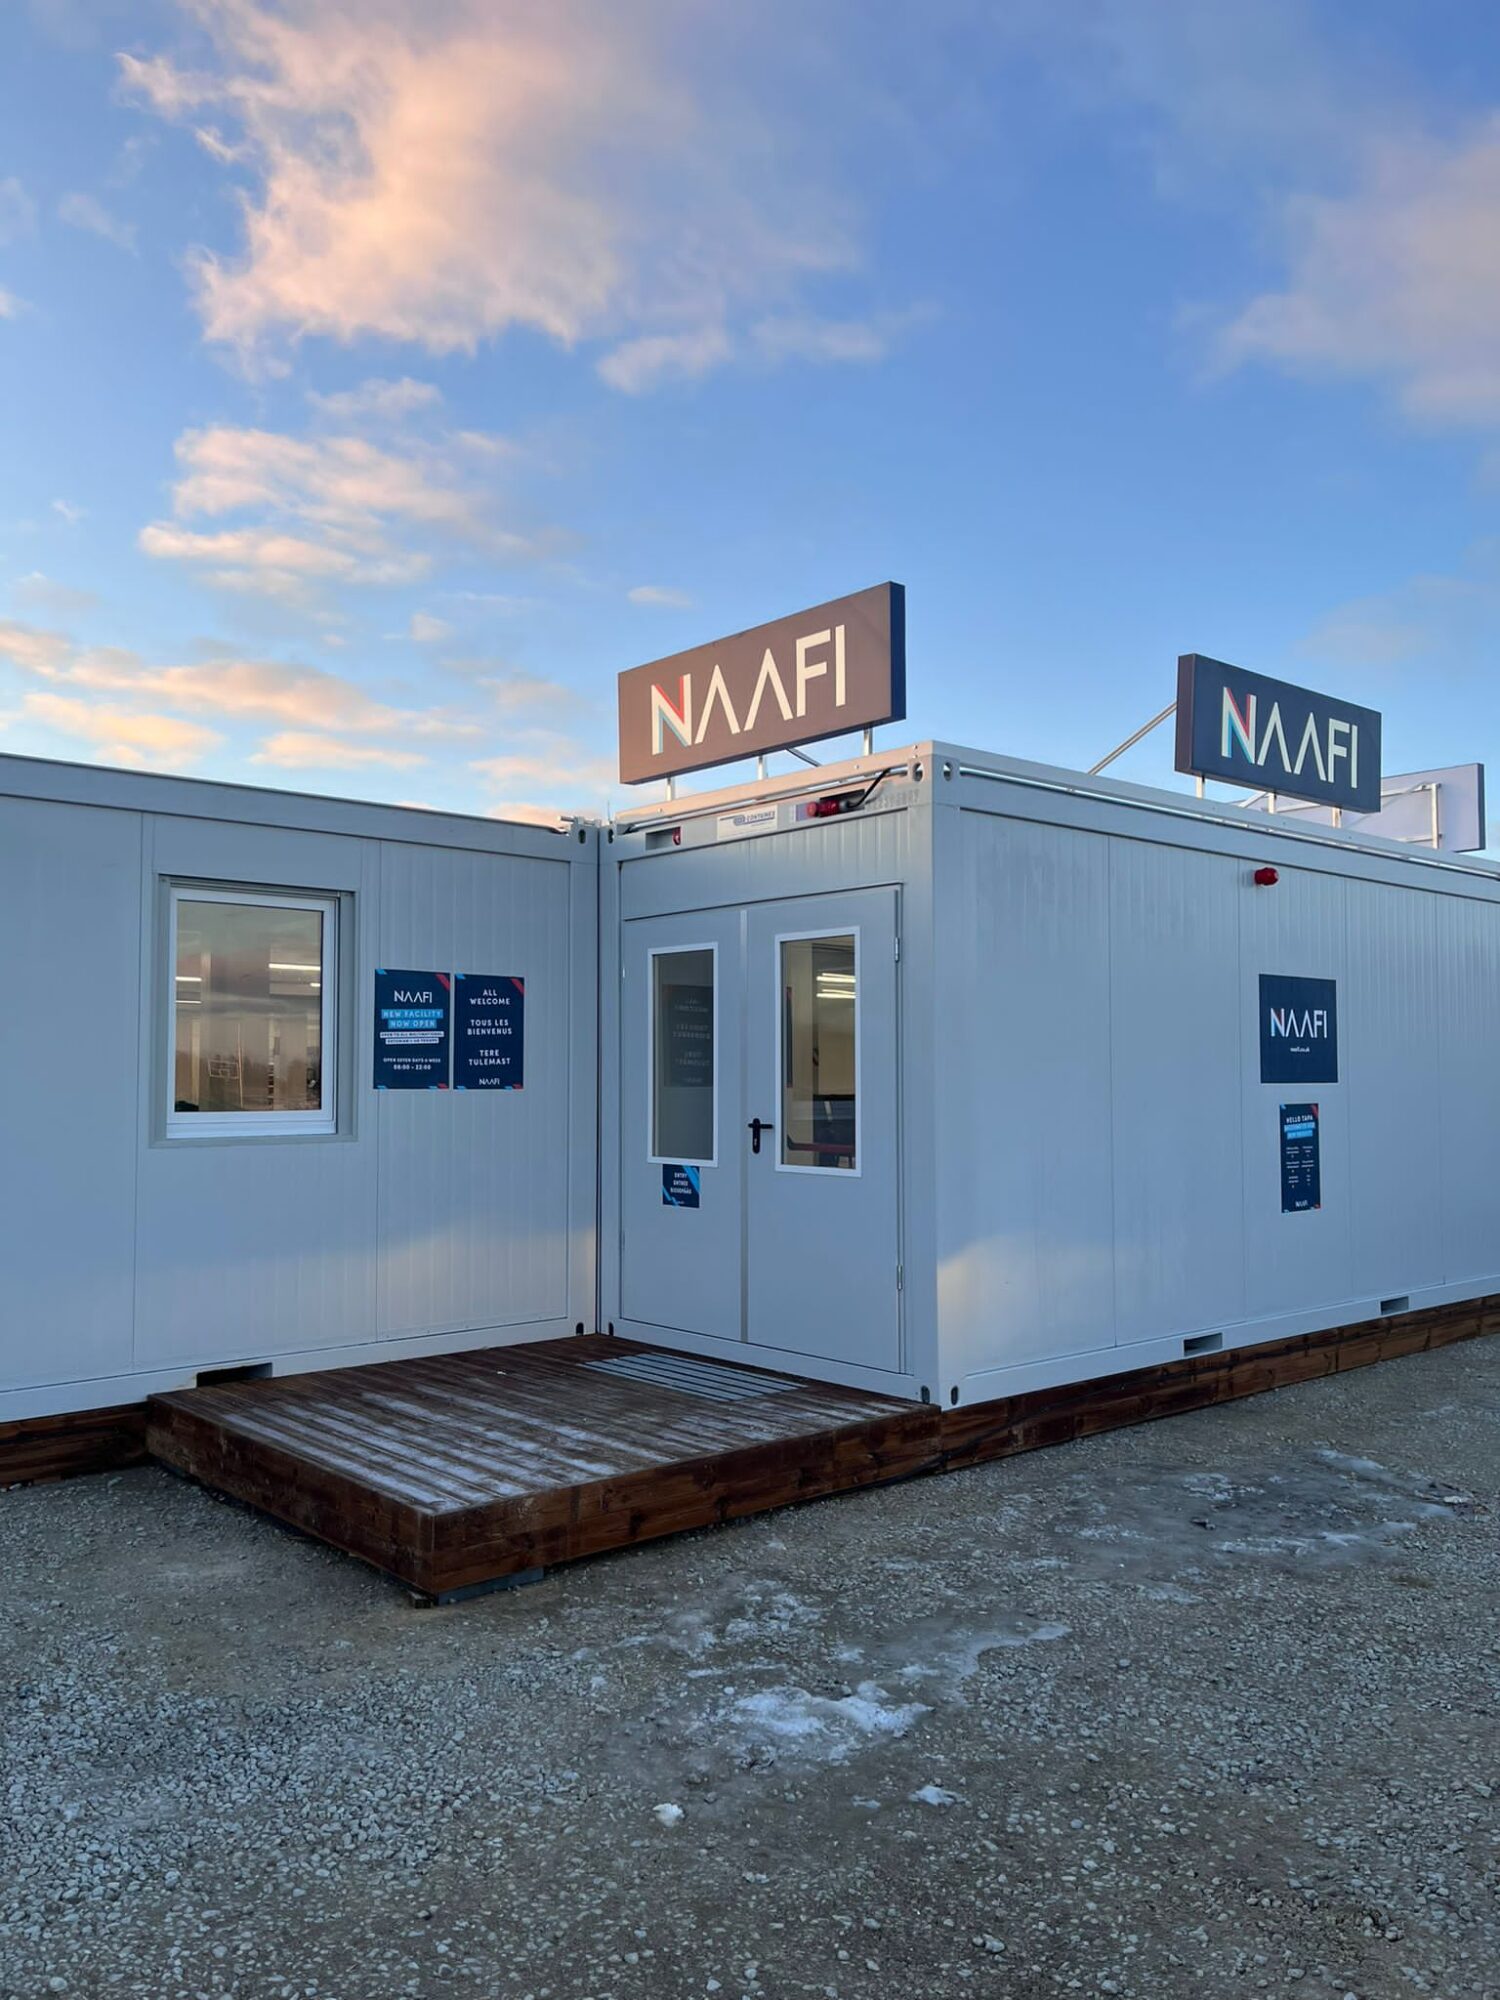 NAAFI facility opens at Camp Tapa in Estonia